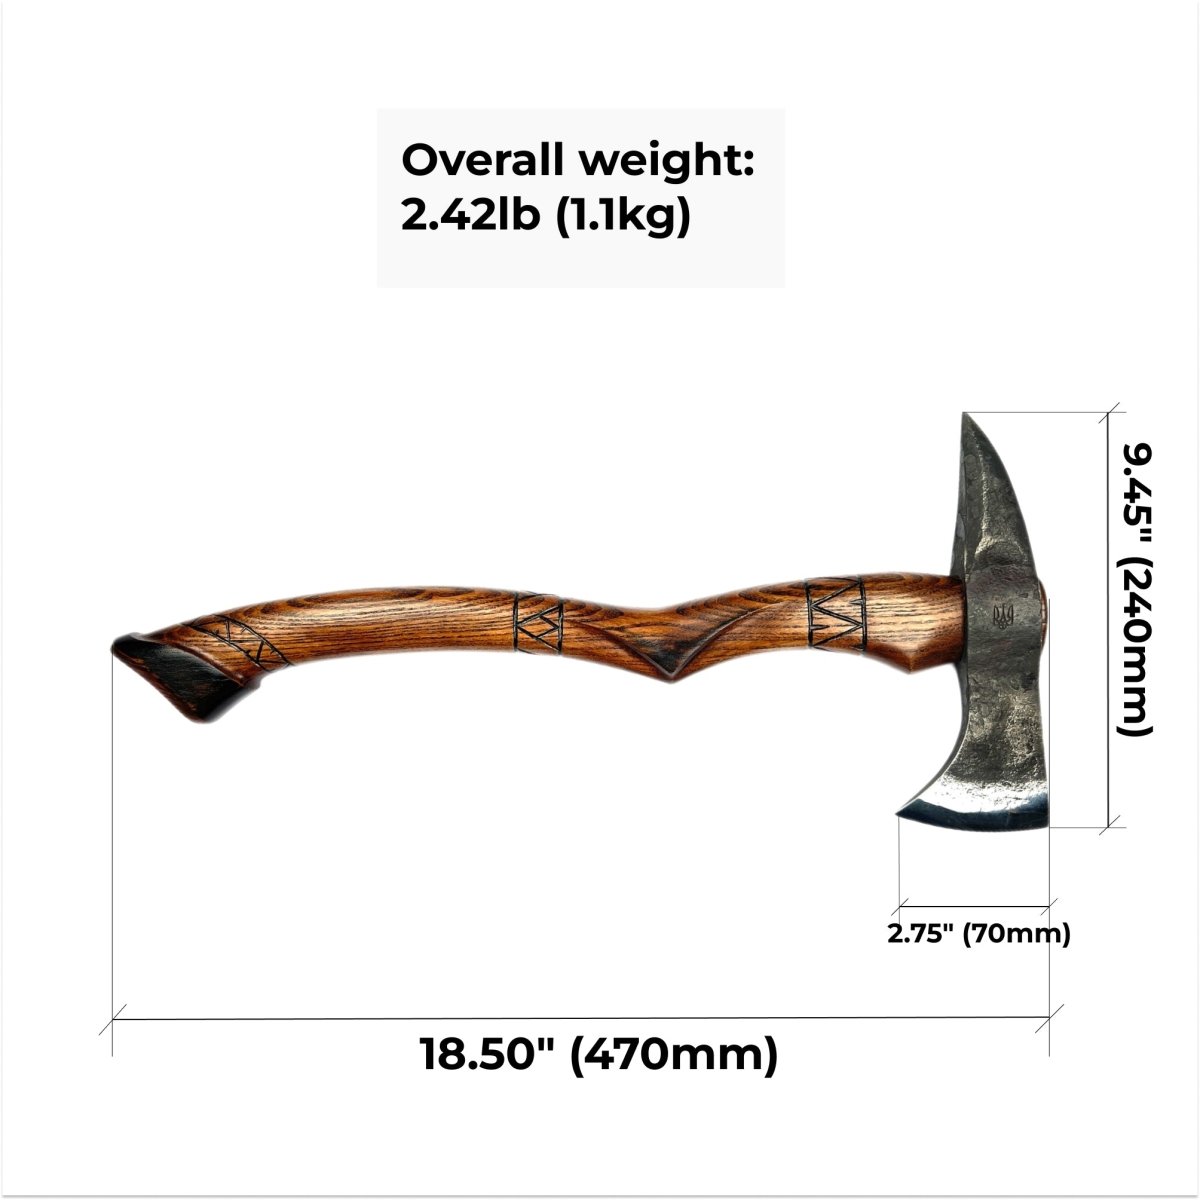 Handmade tomahawk axe "Black Hawk" from AncientSmithy